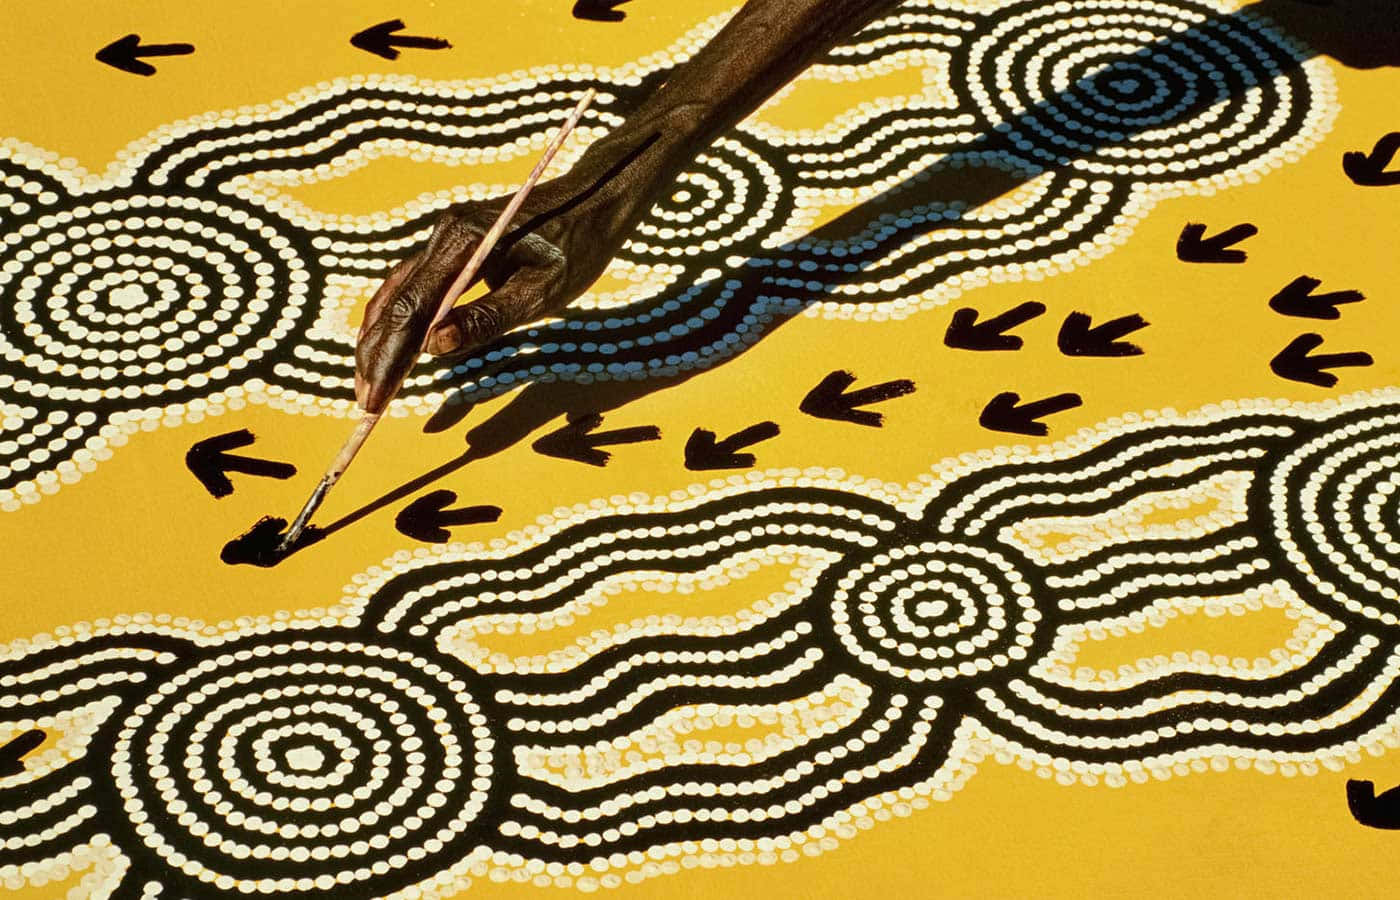 Aboriginal art celebrating the beauty of Indigenous heritage